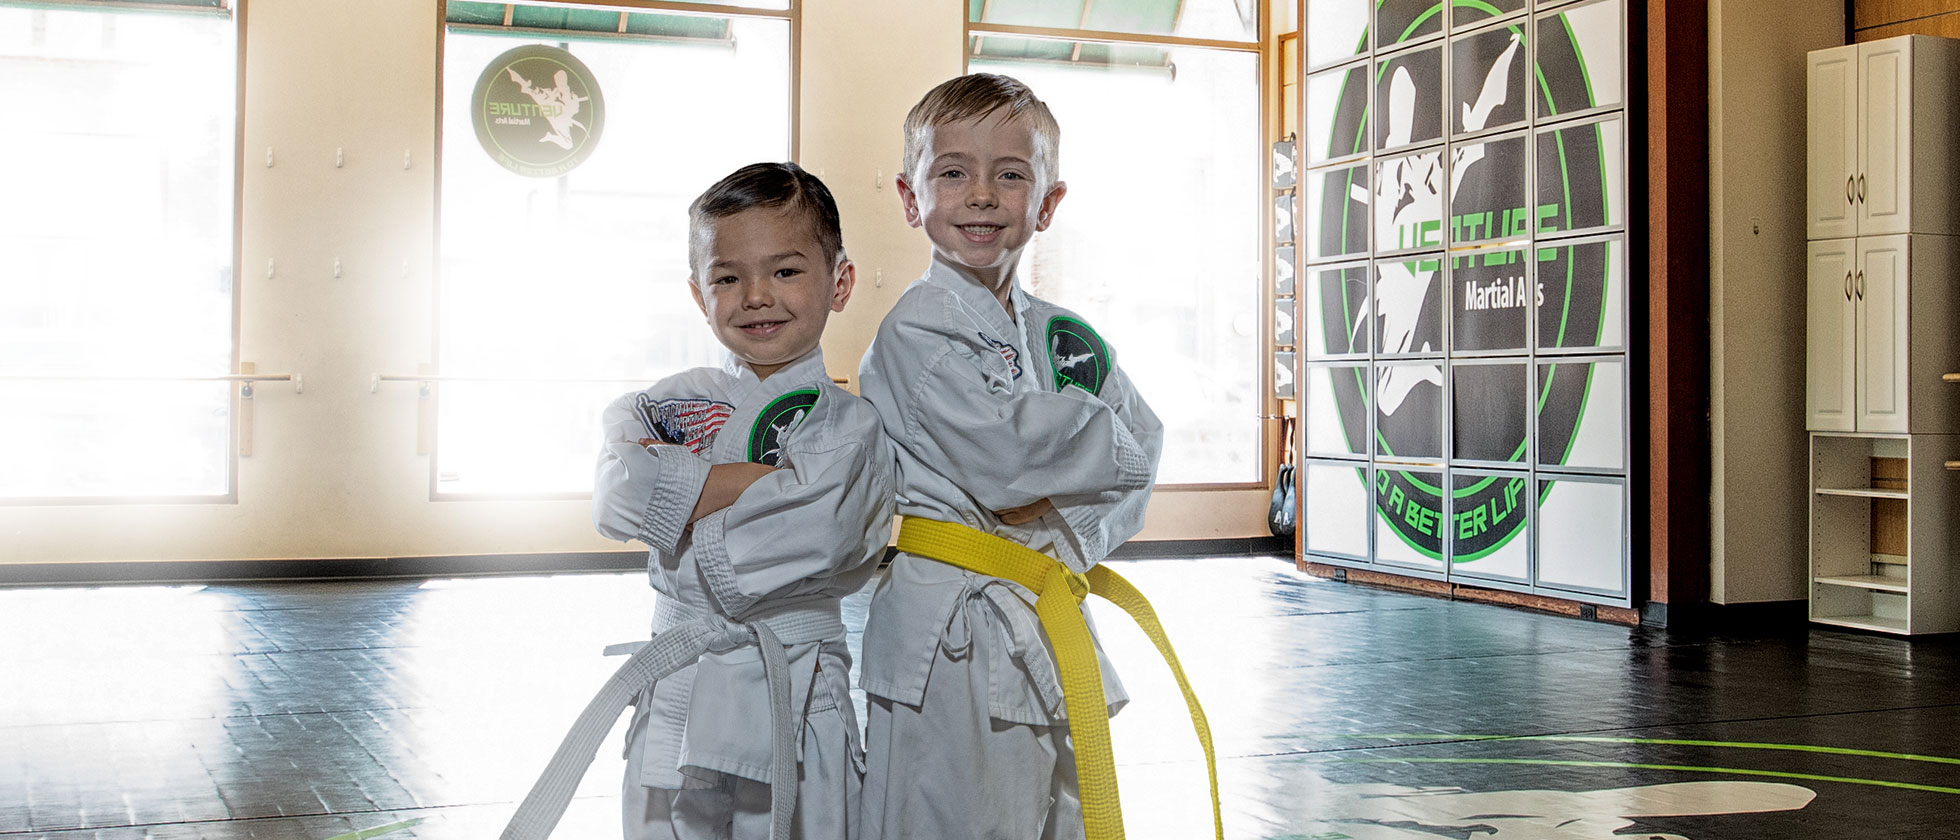 Top 5 Best Martial Arts Schools To Join In Stapleton, Colorado